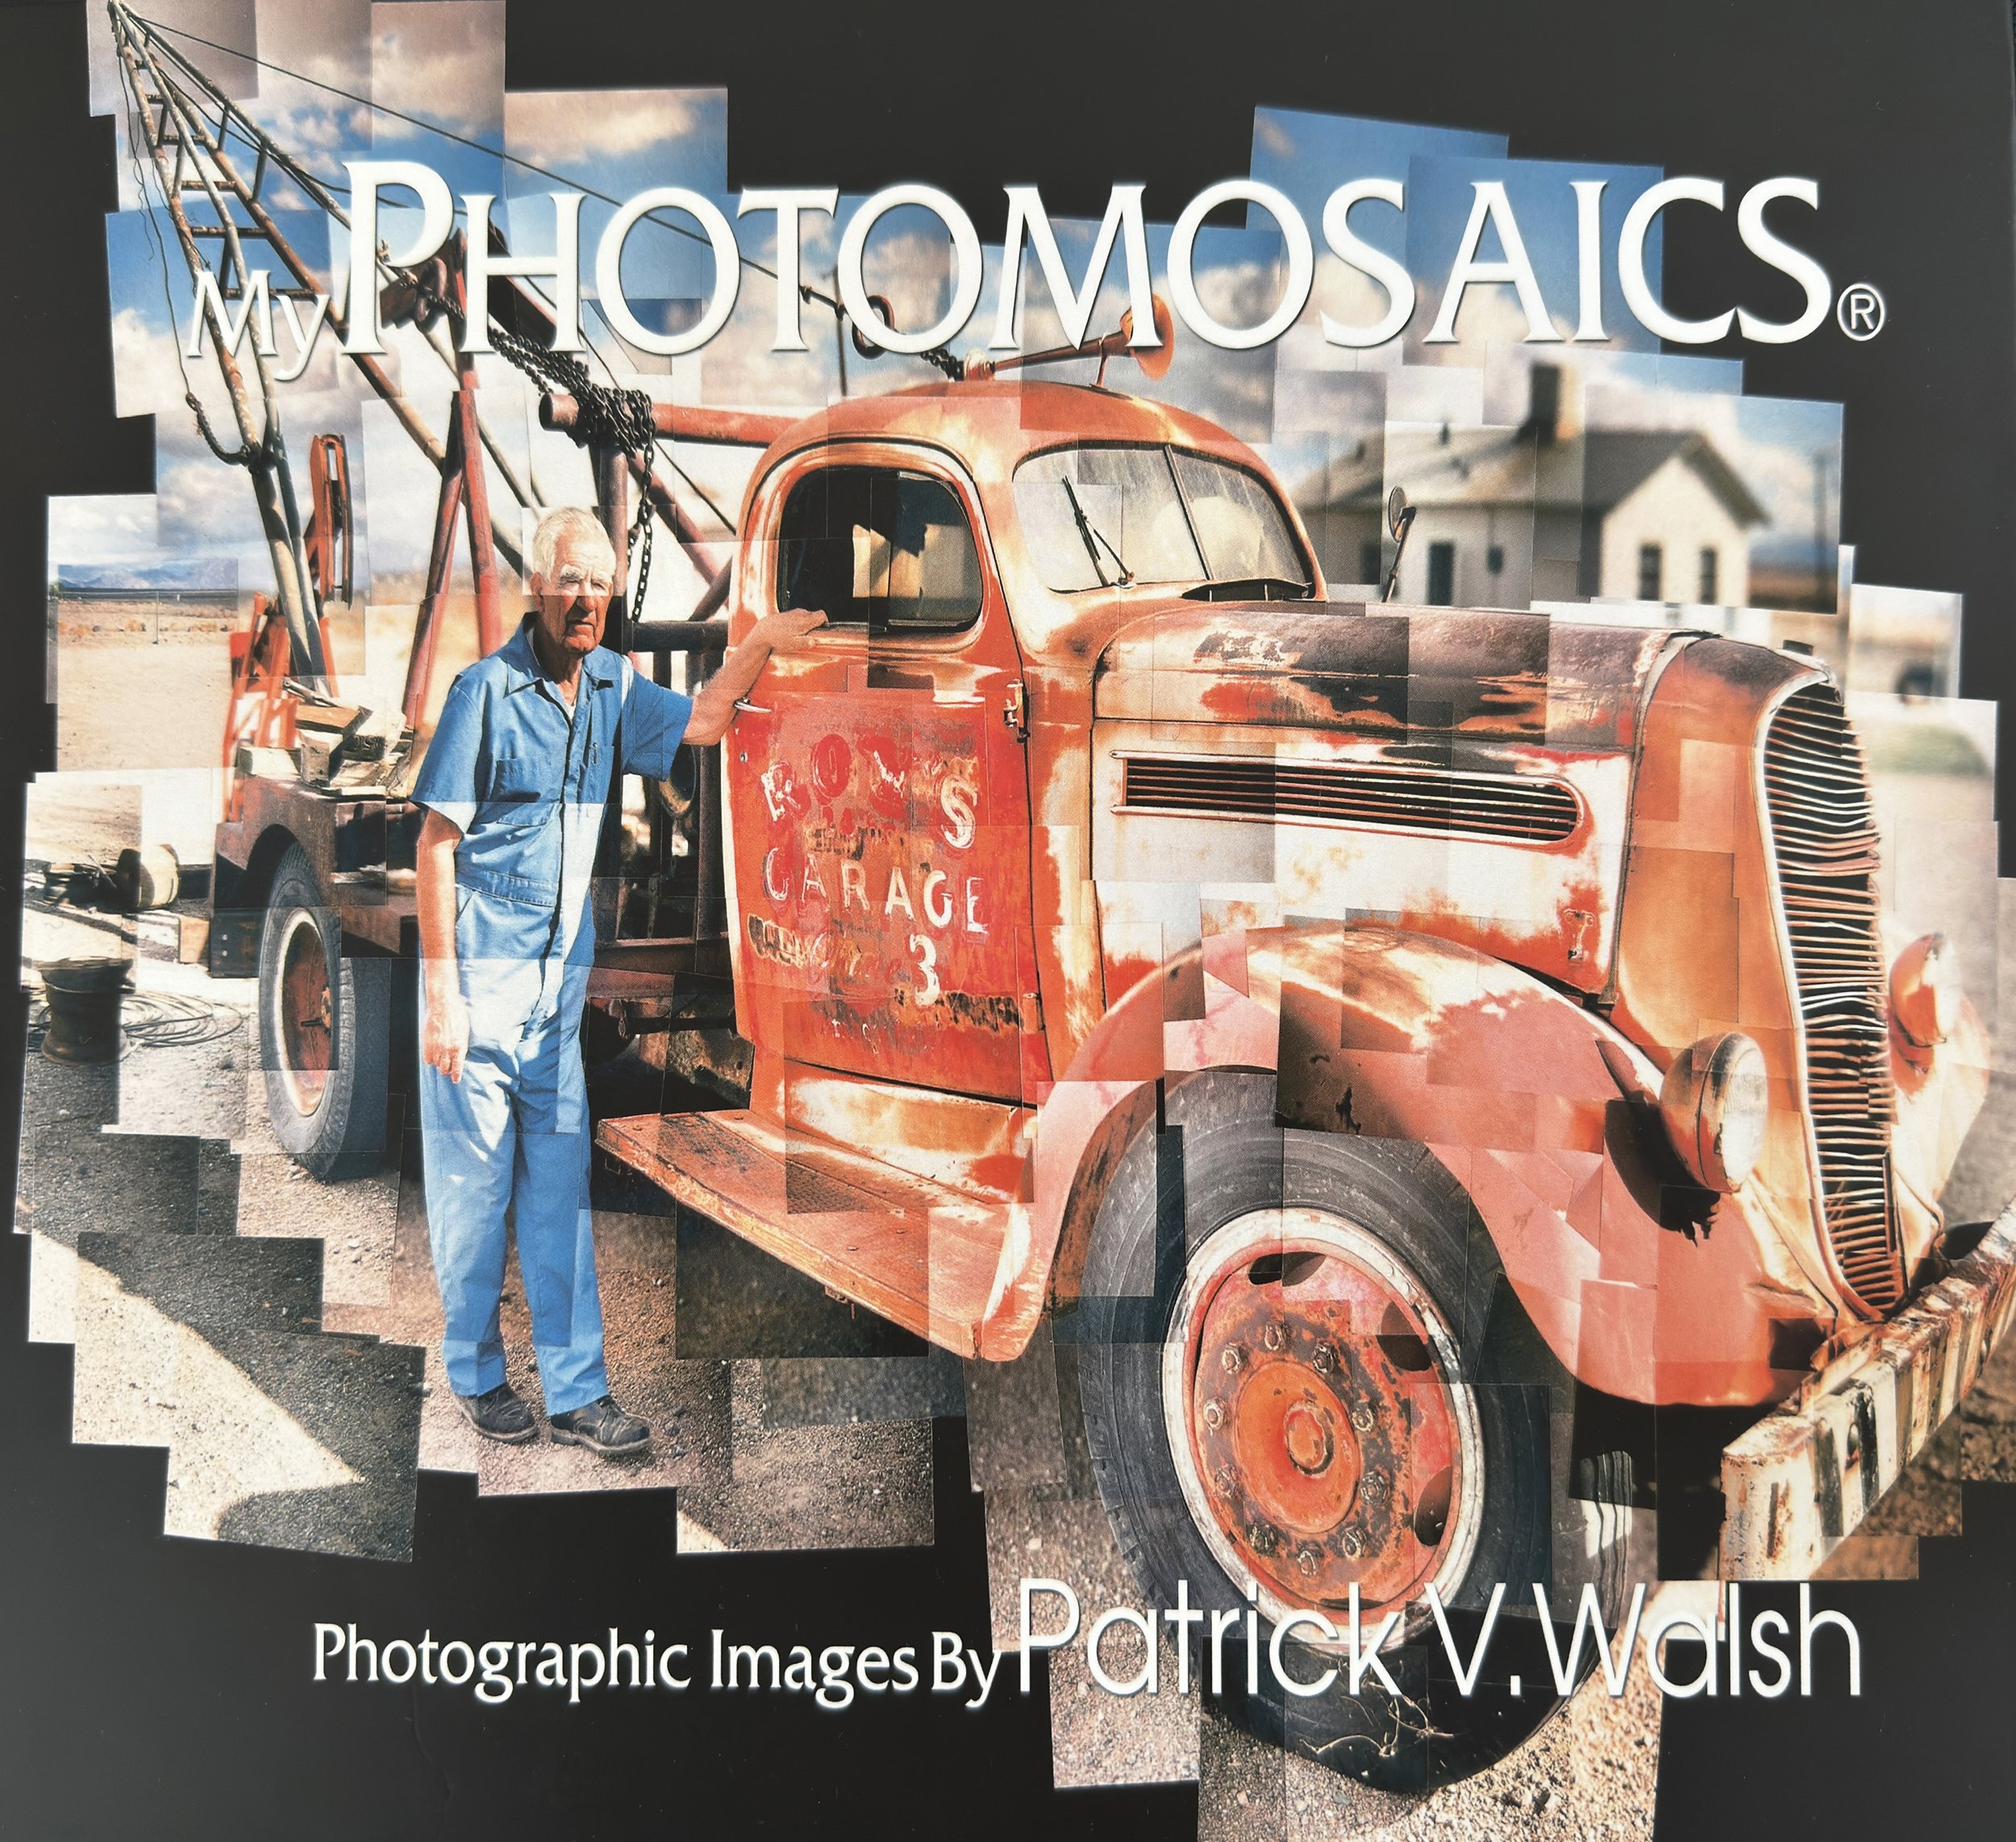 Photomosaic book available through website and Amazon.